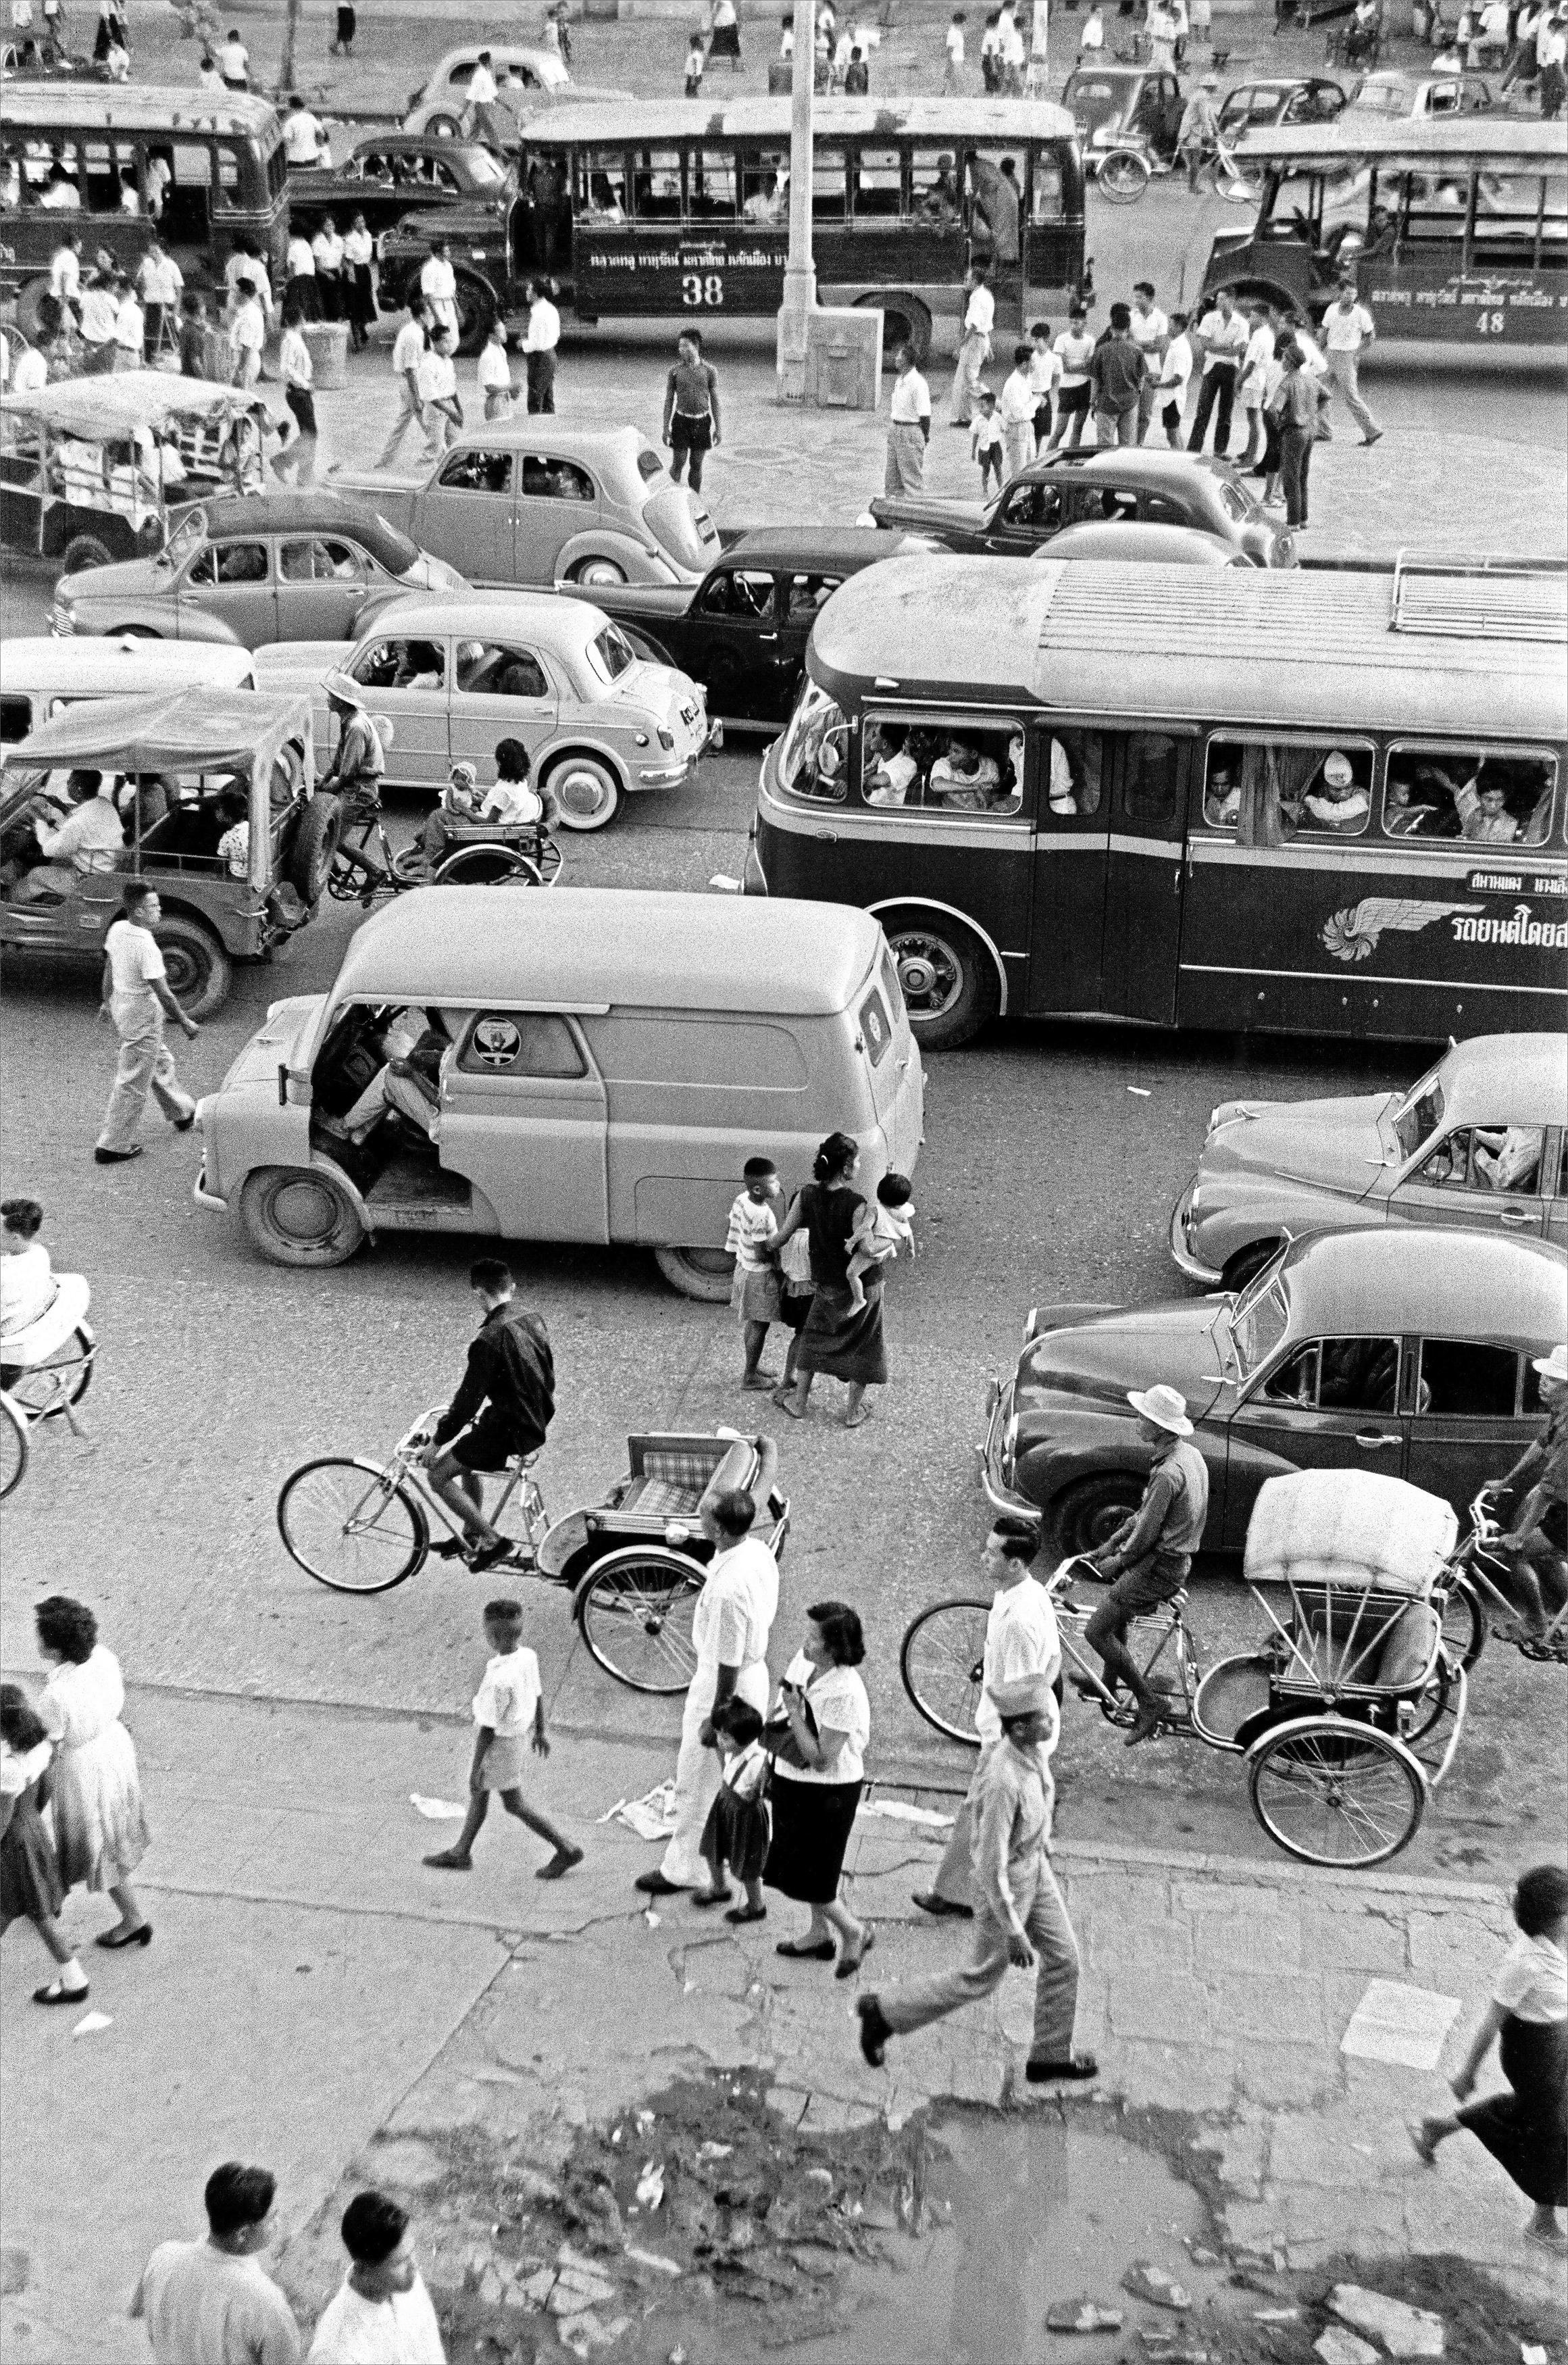 Fabrizio La Torre Black and White Photograph - Trafic jam in Bangkok -Thailand 1957 - Large size Black & White Fine Art Print